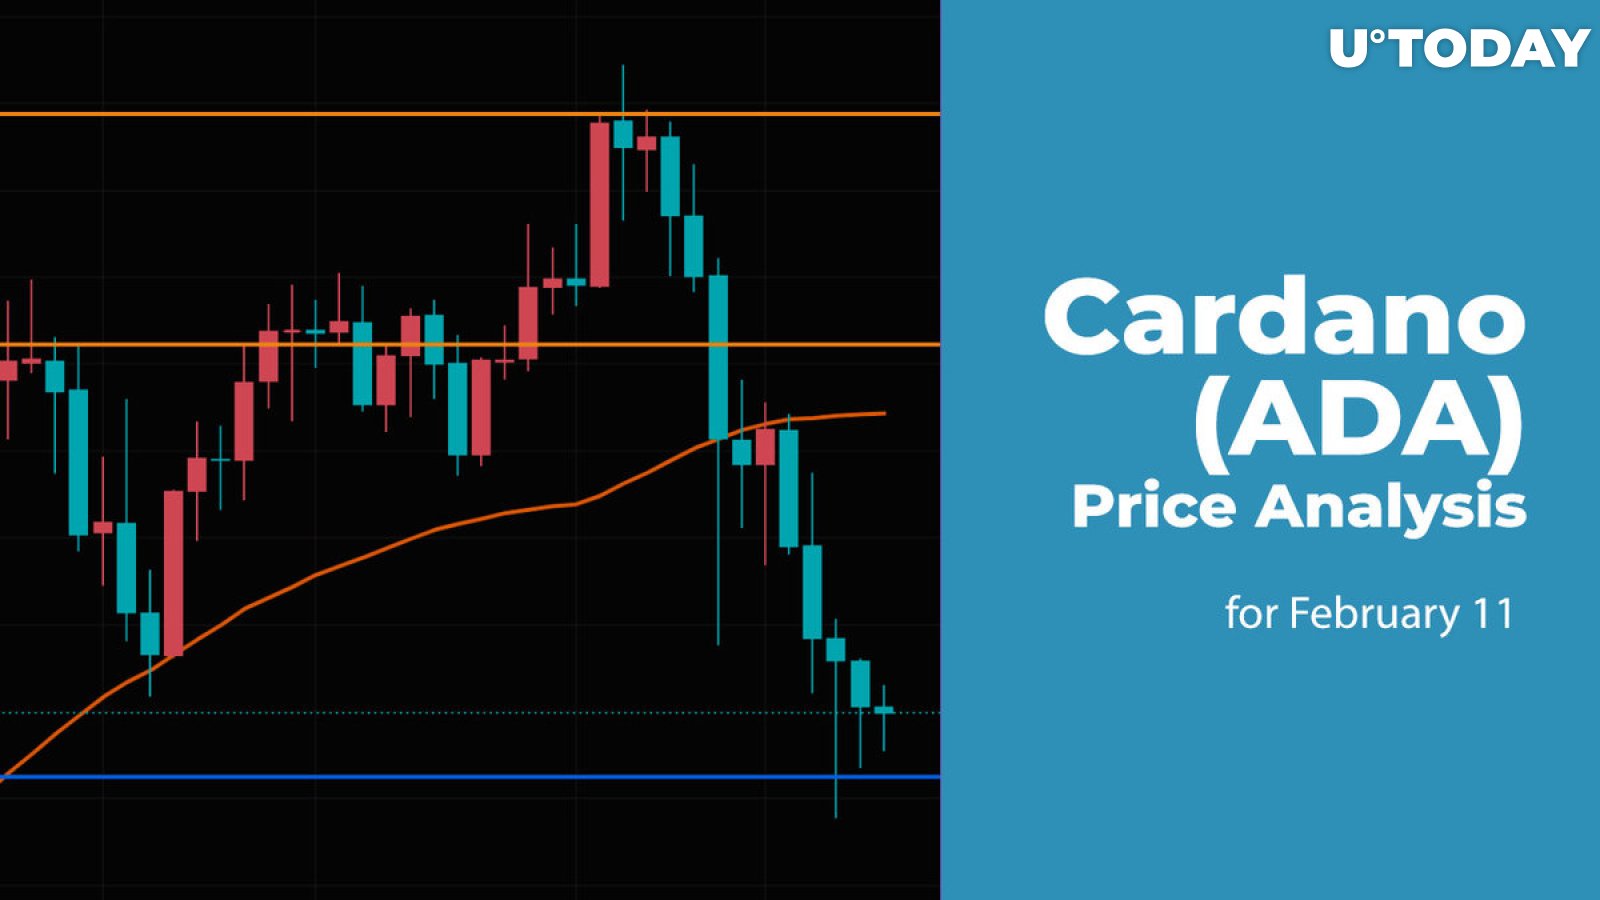 Cardano (ADA) Price Analysis for February 11